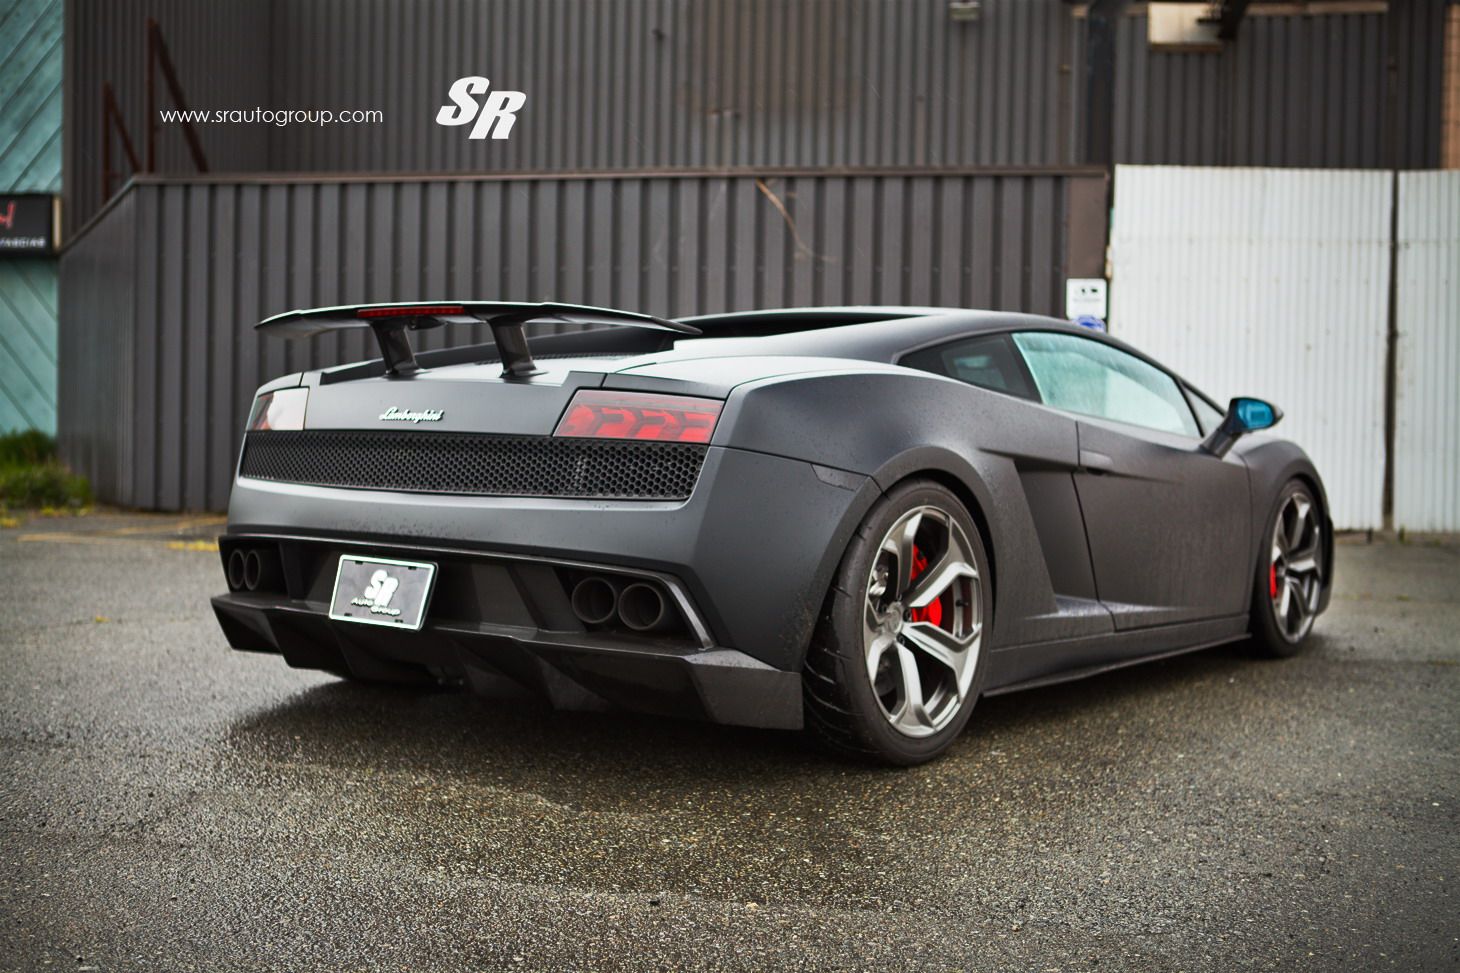 2013 Lamborghini Gallardo by Underground Racing and SR Auto Group